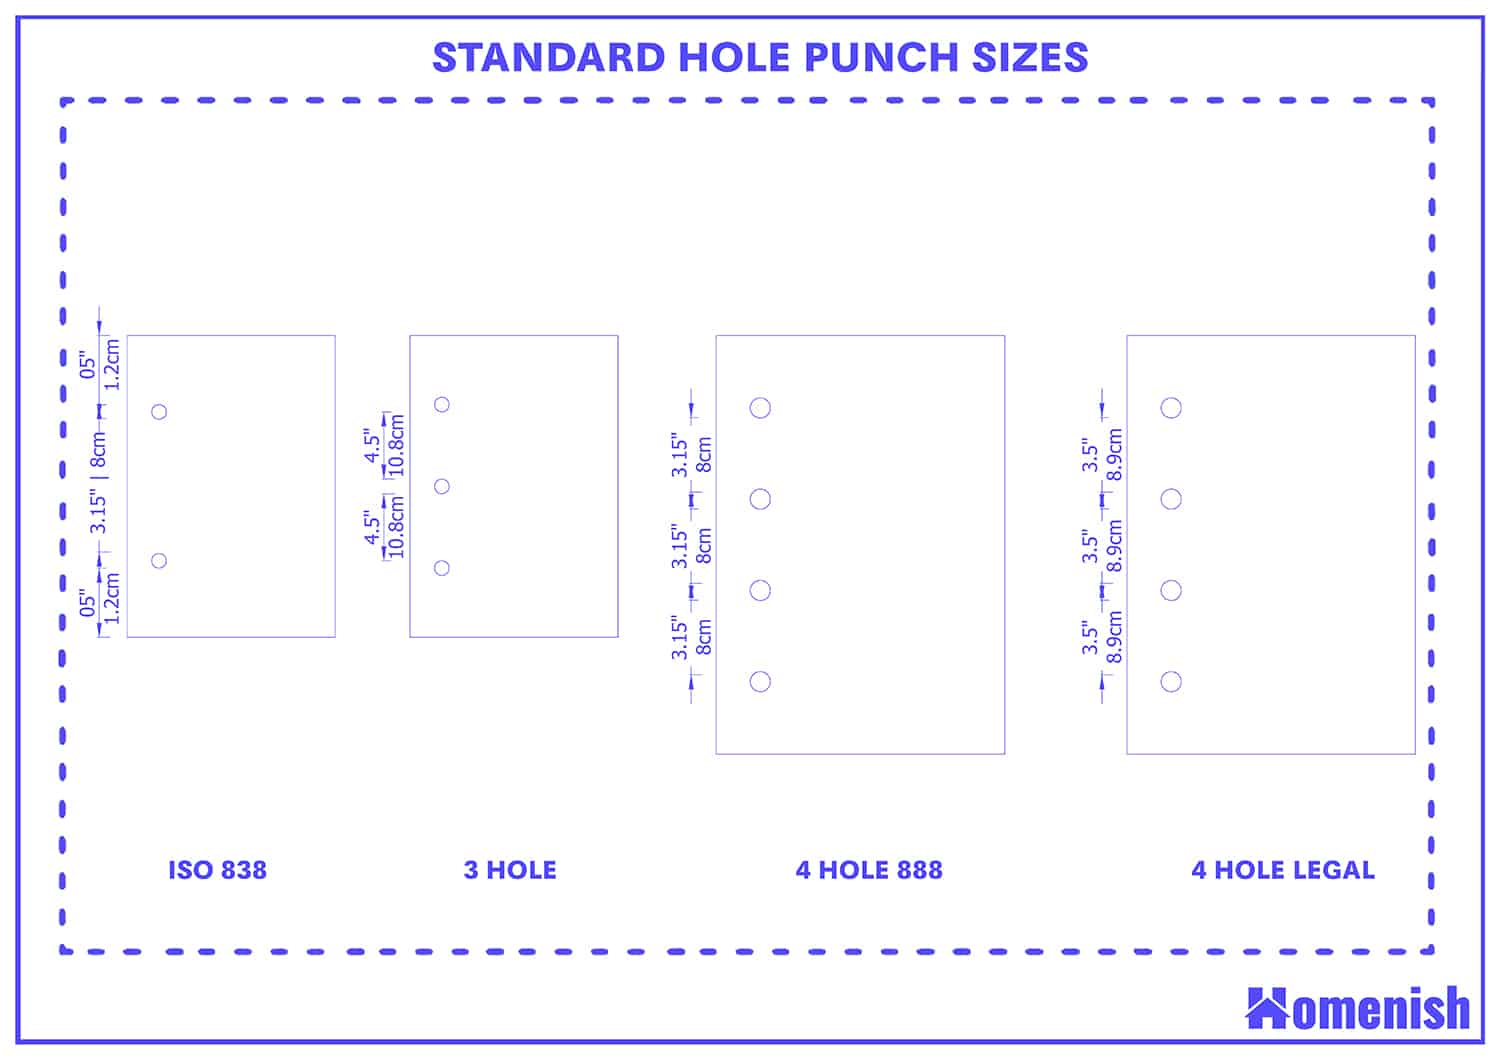 Standard Hole Punch Sizes